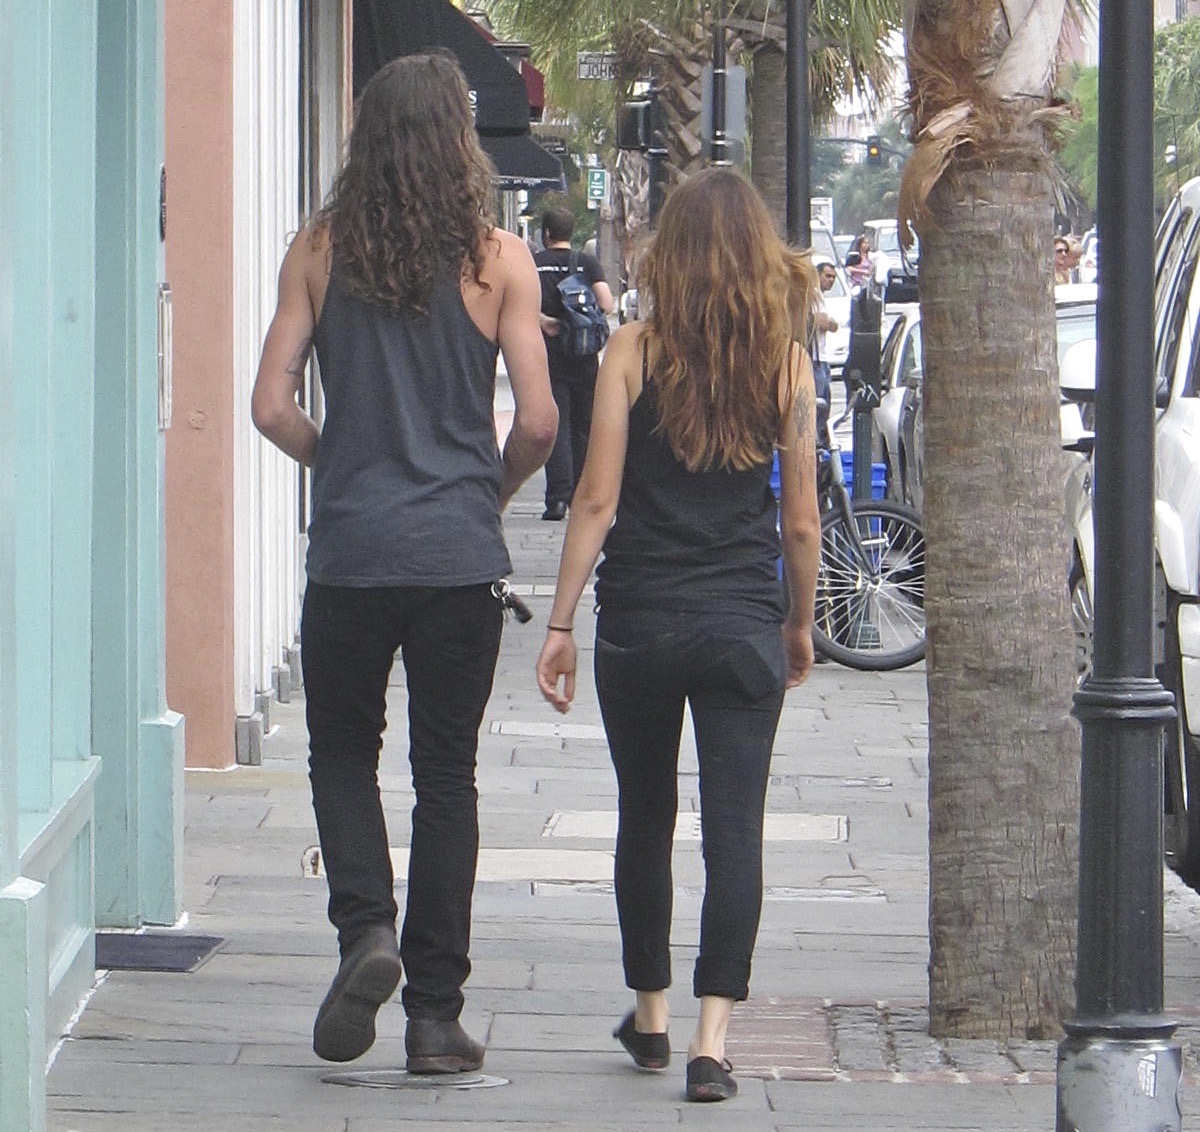  Look-Alike Couple in Charleston,&nbsp;SC 